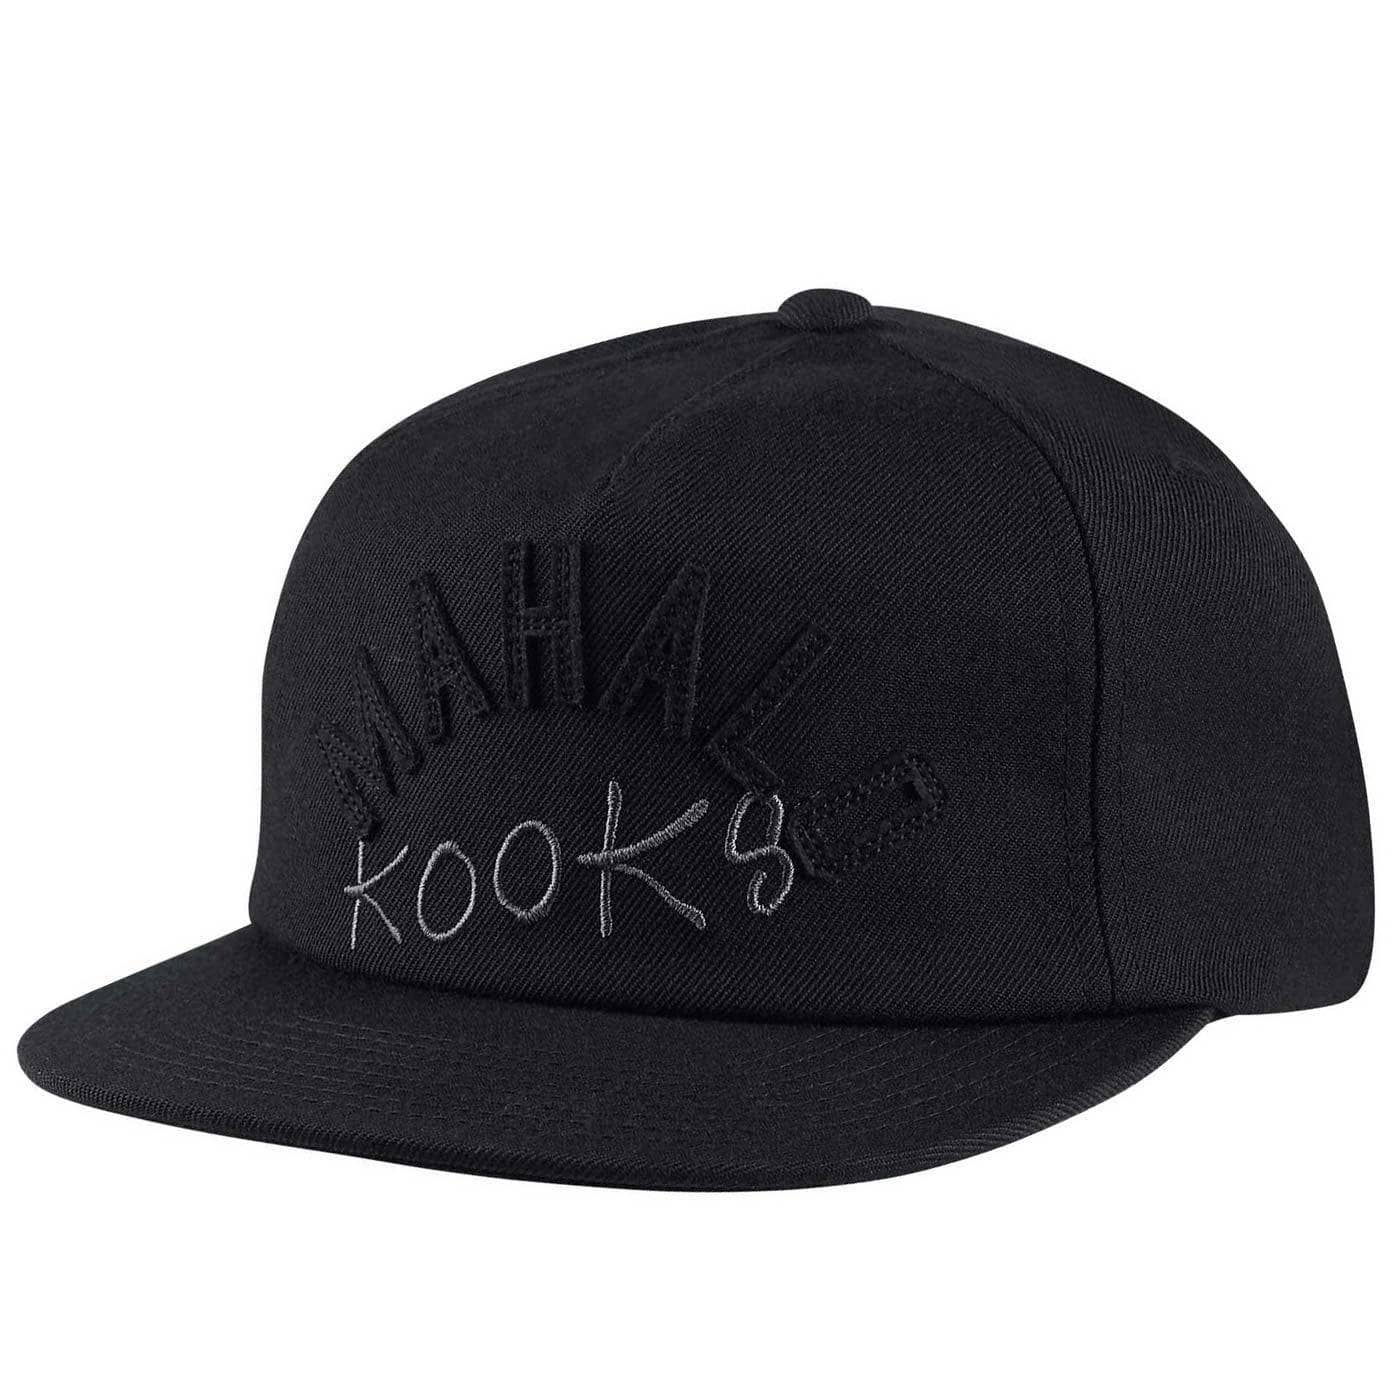 Hurley Mahalo Kooks Hat Black O/S (one size) Strapback Cap by Hurley